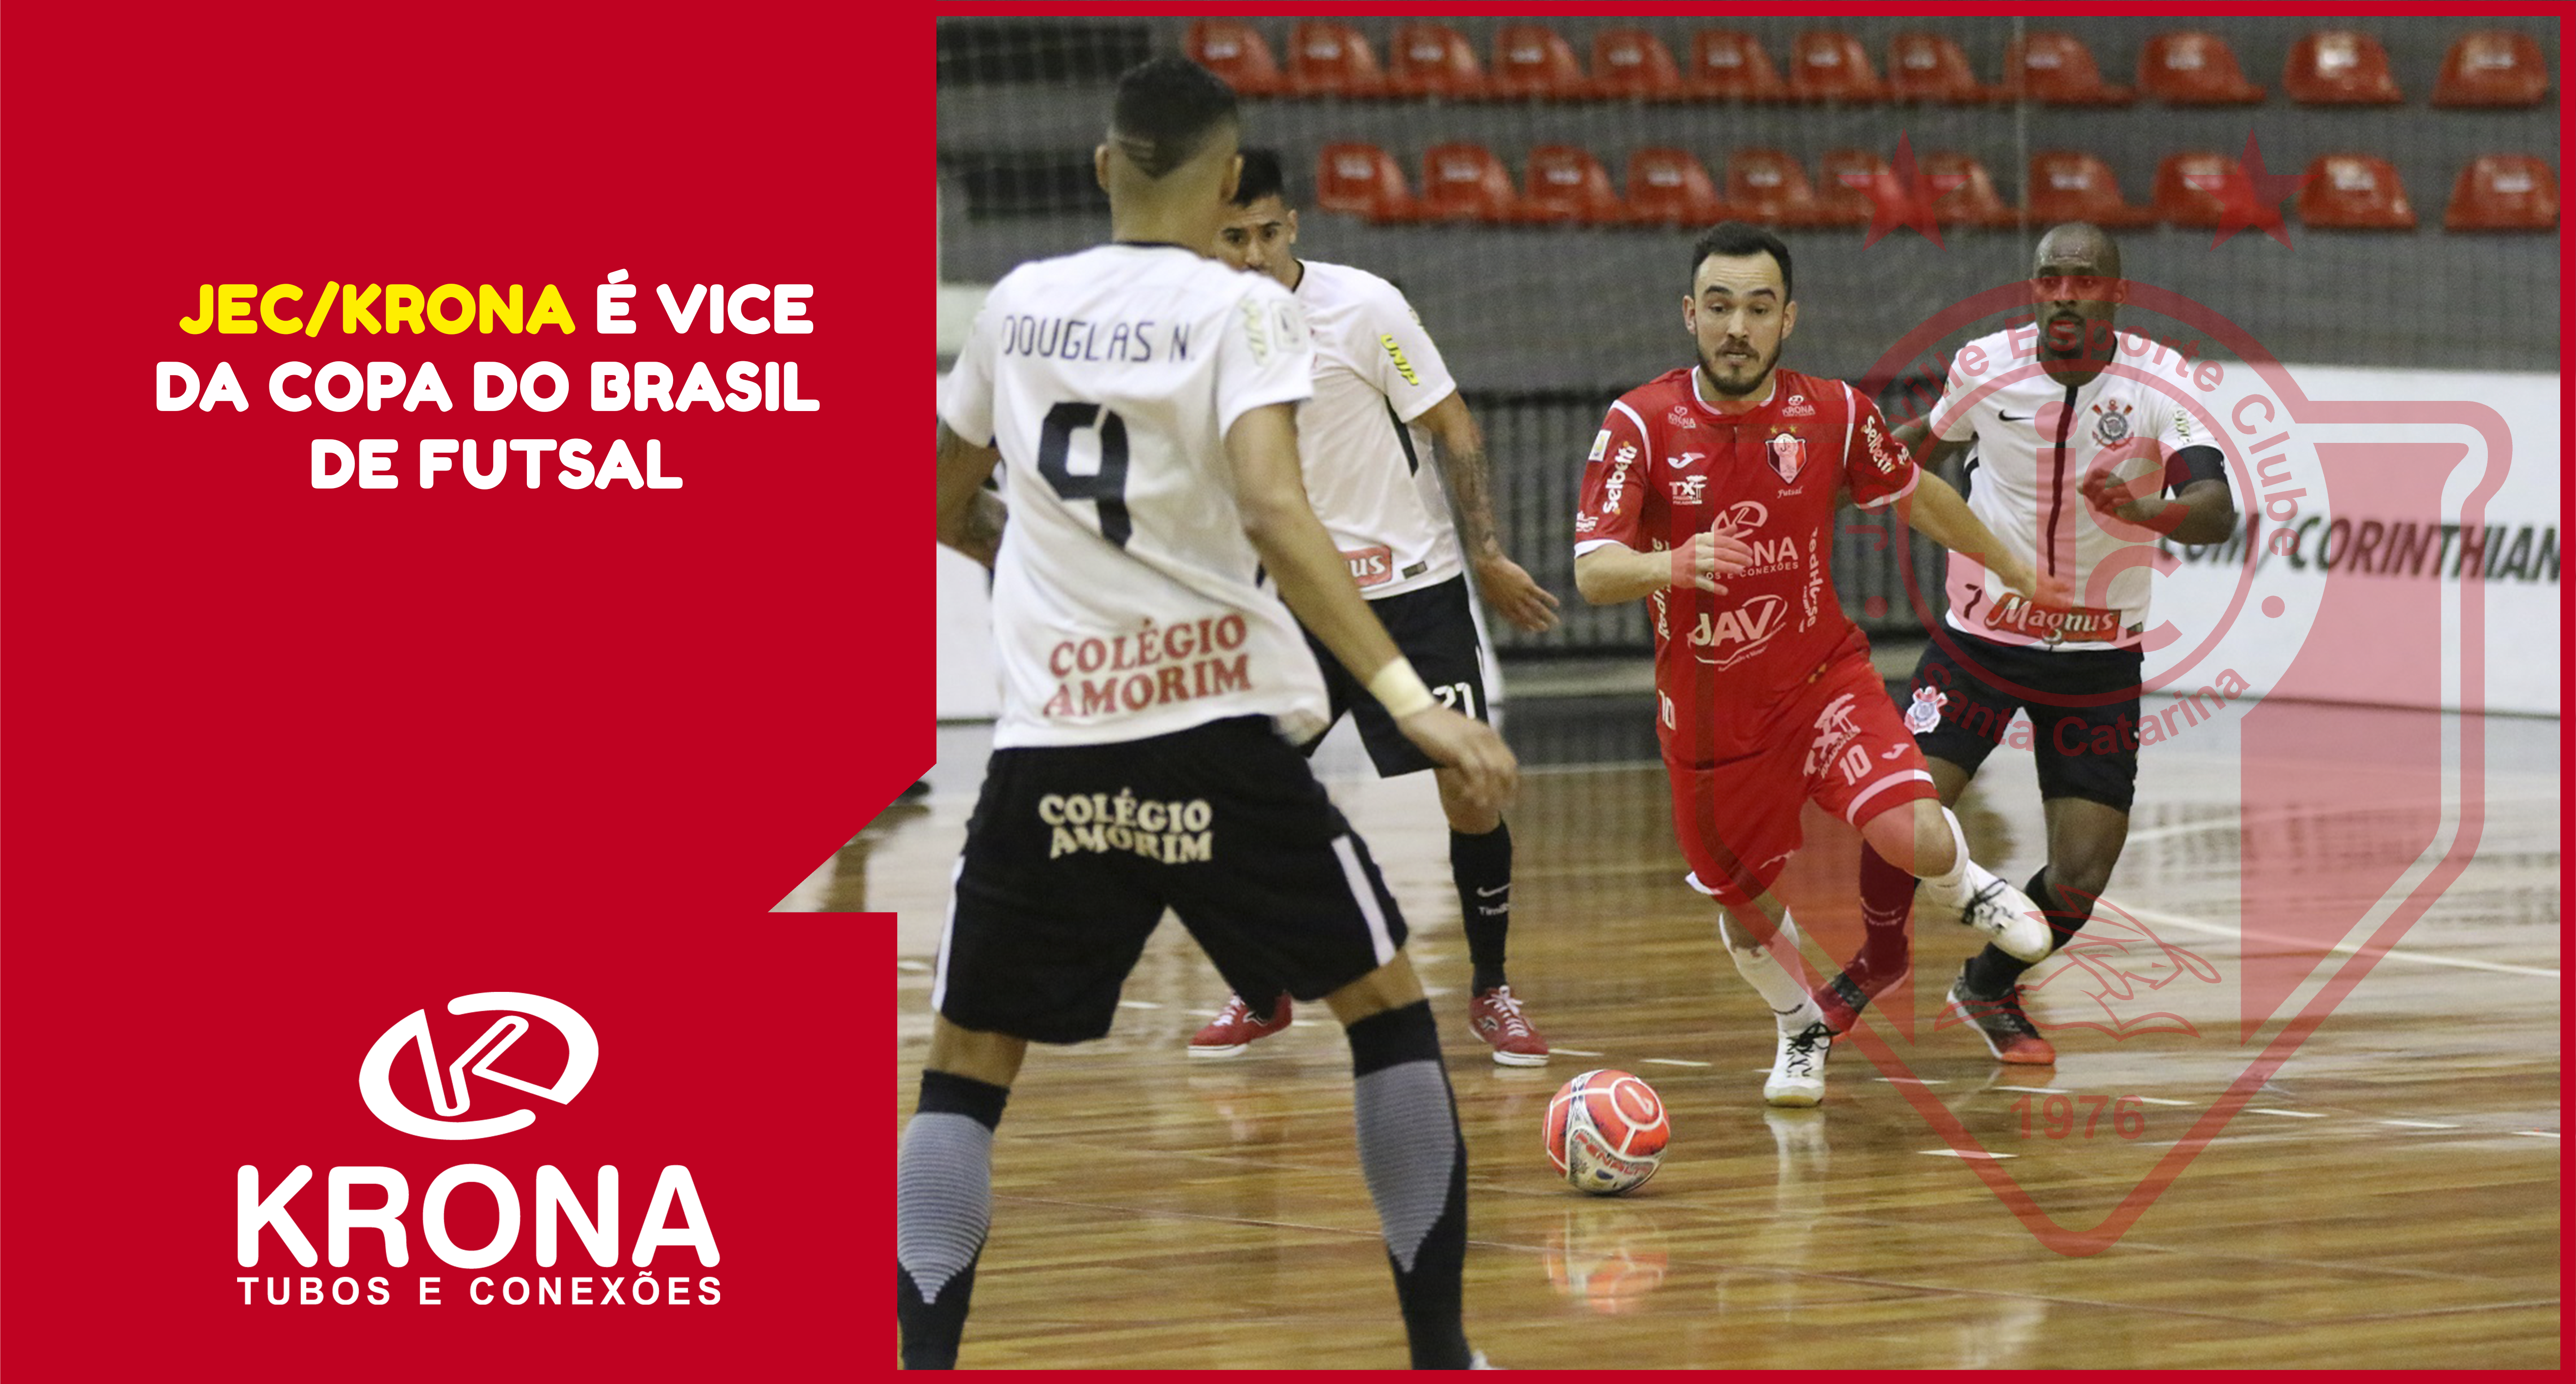 JEC/Krona é vice na Copa do Brasil de Futsal.